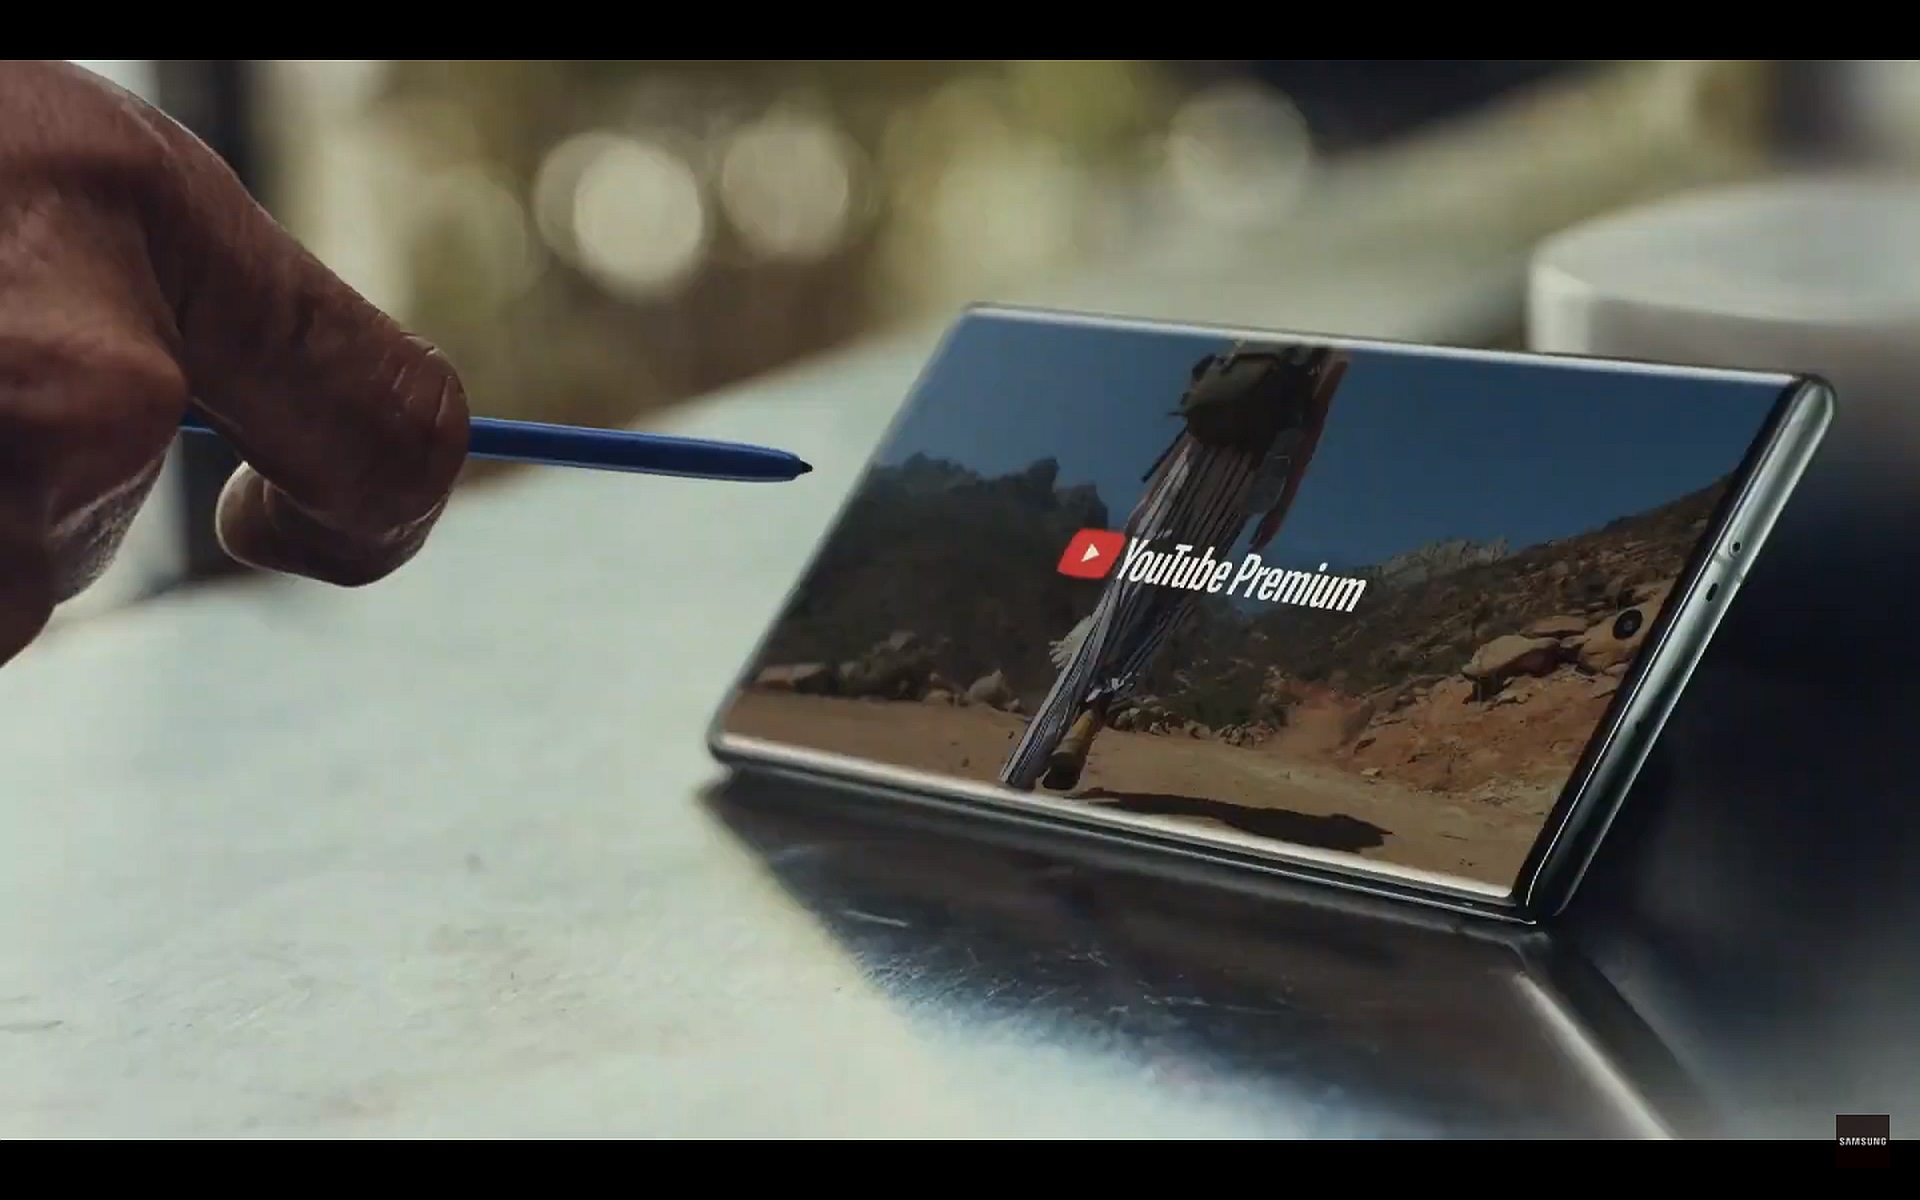 Samsung Note 10 Snapdragon Характеристики